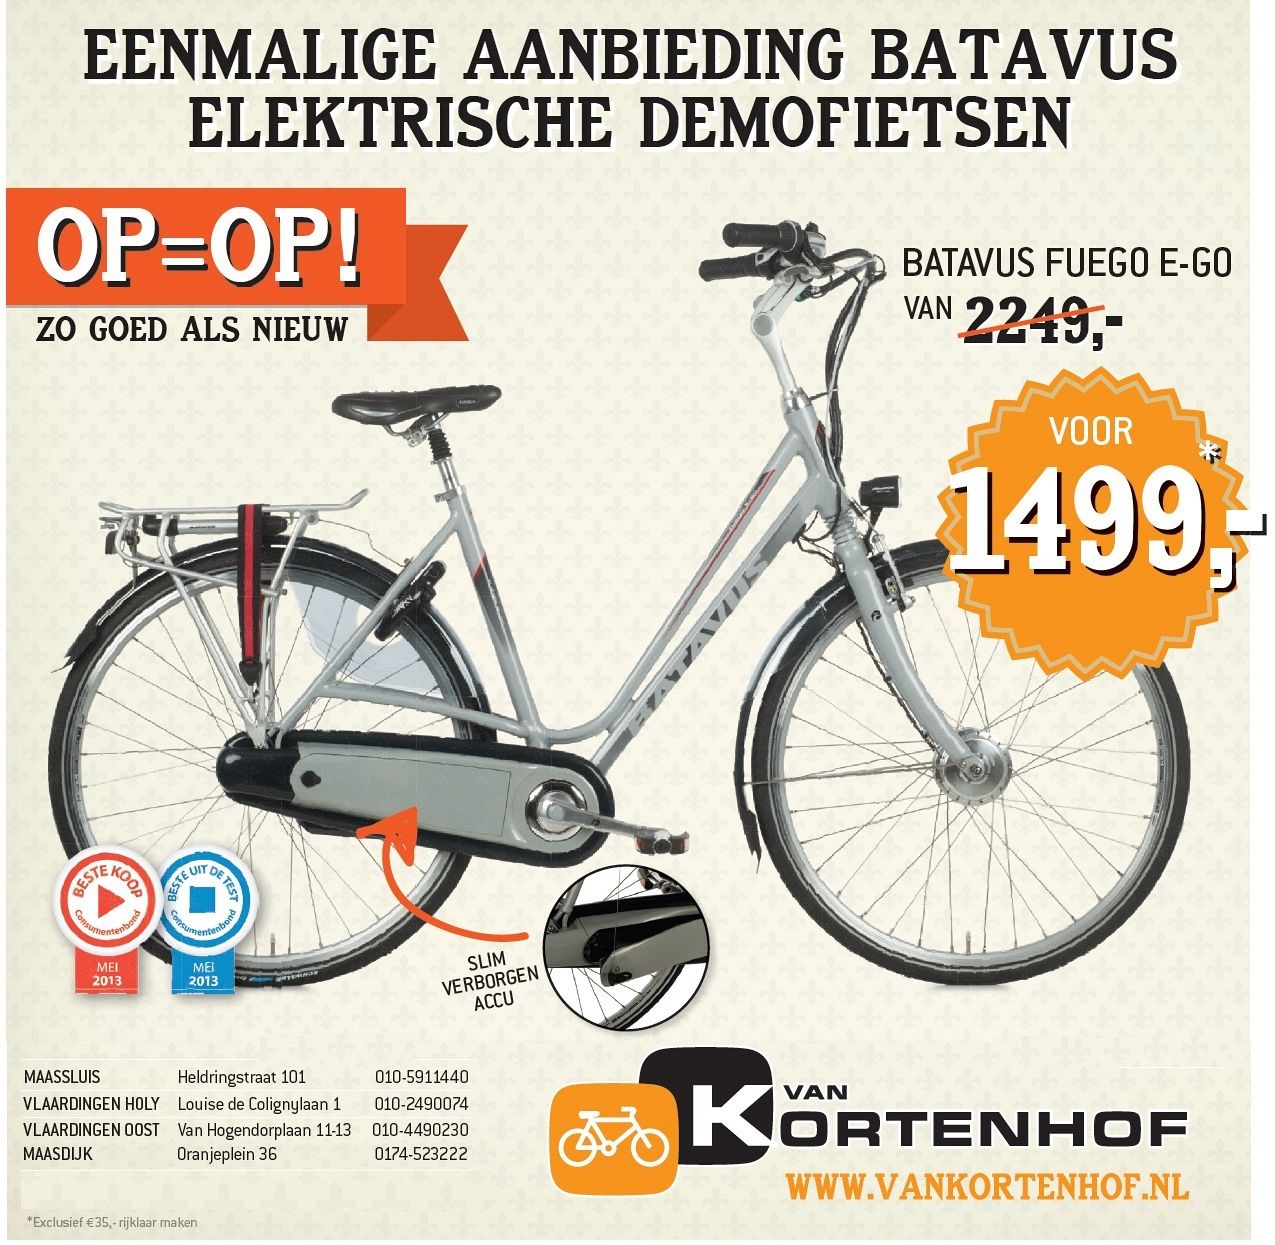 750 euro korting op Batavus E-bike!